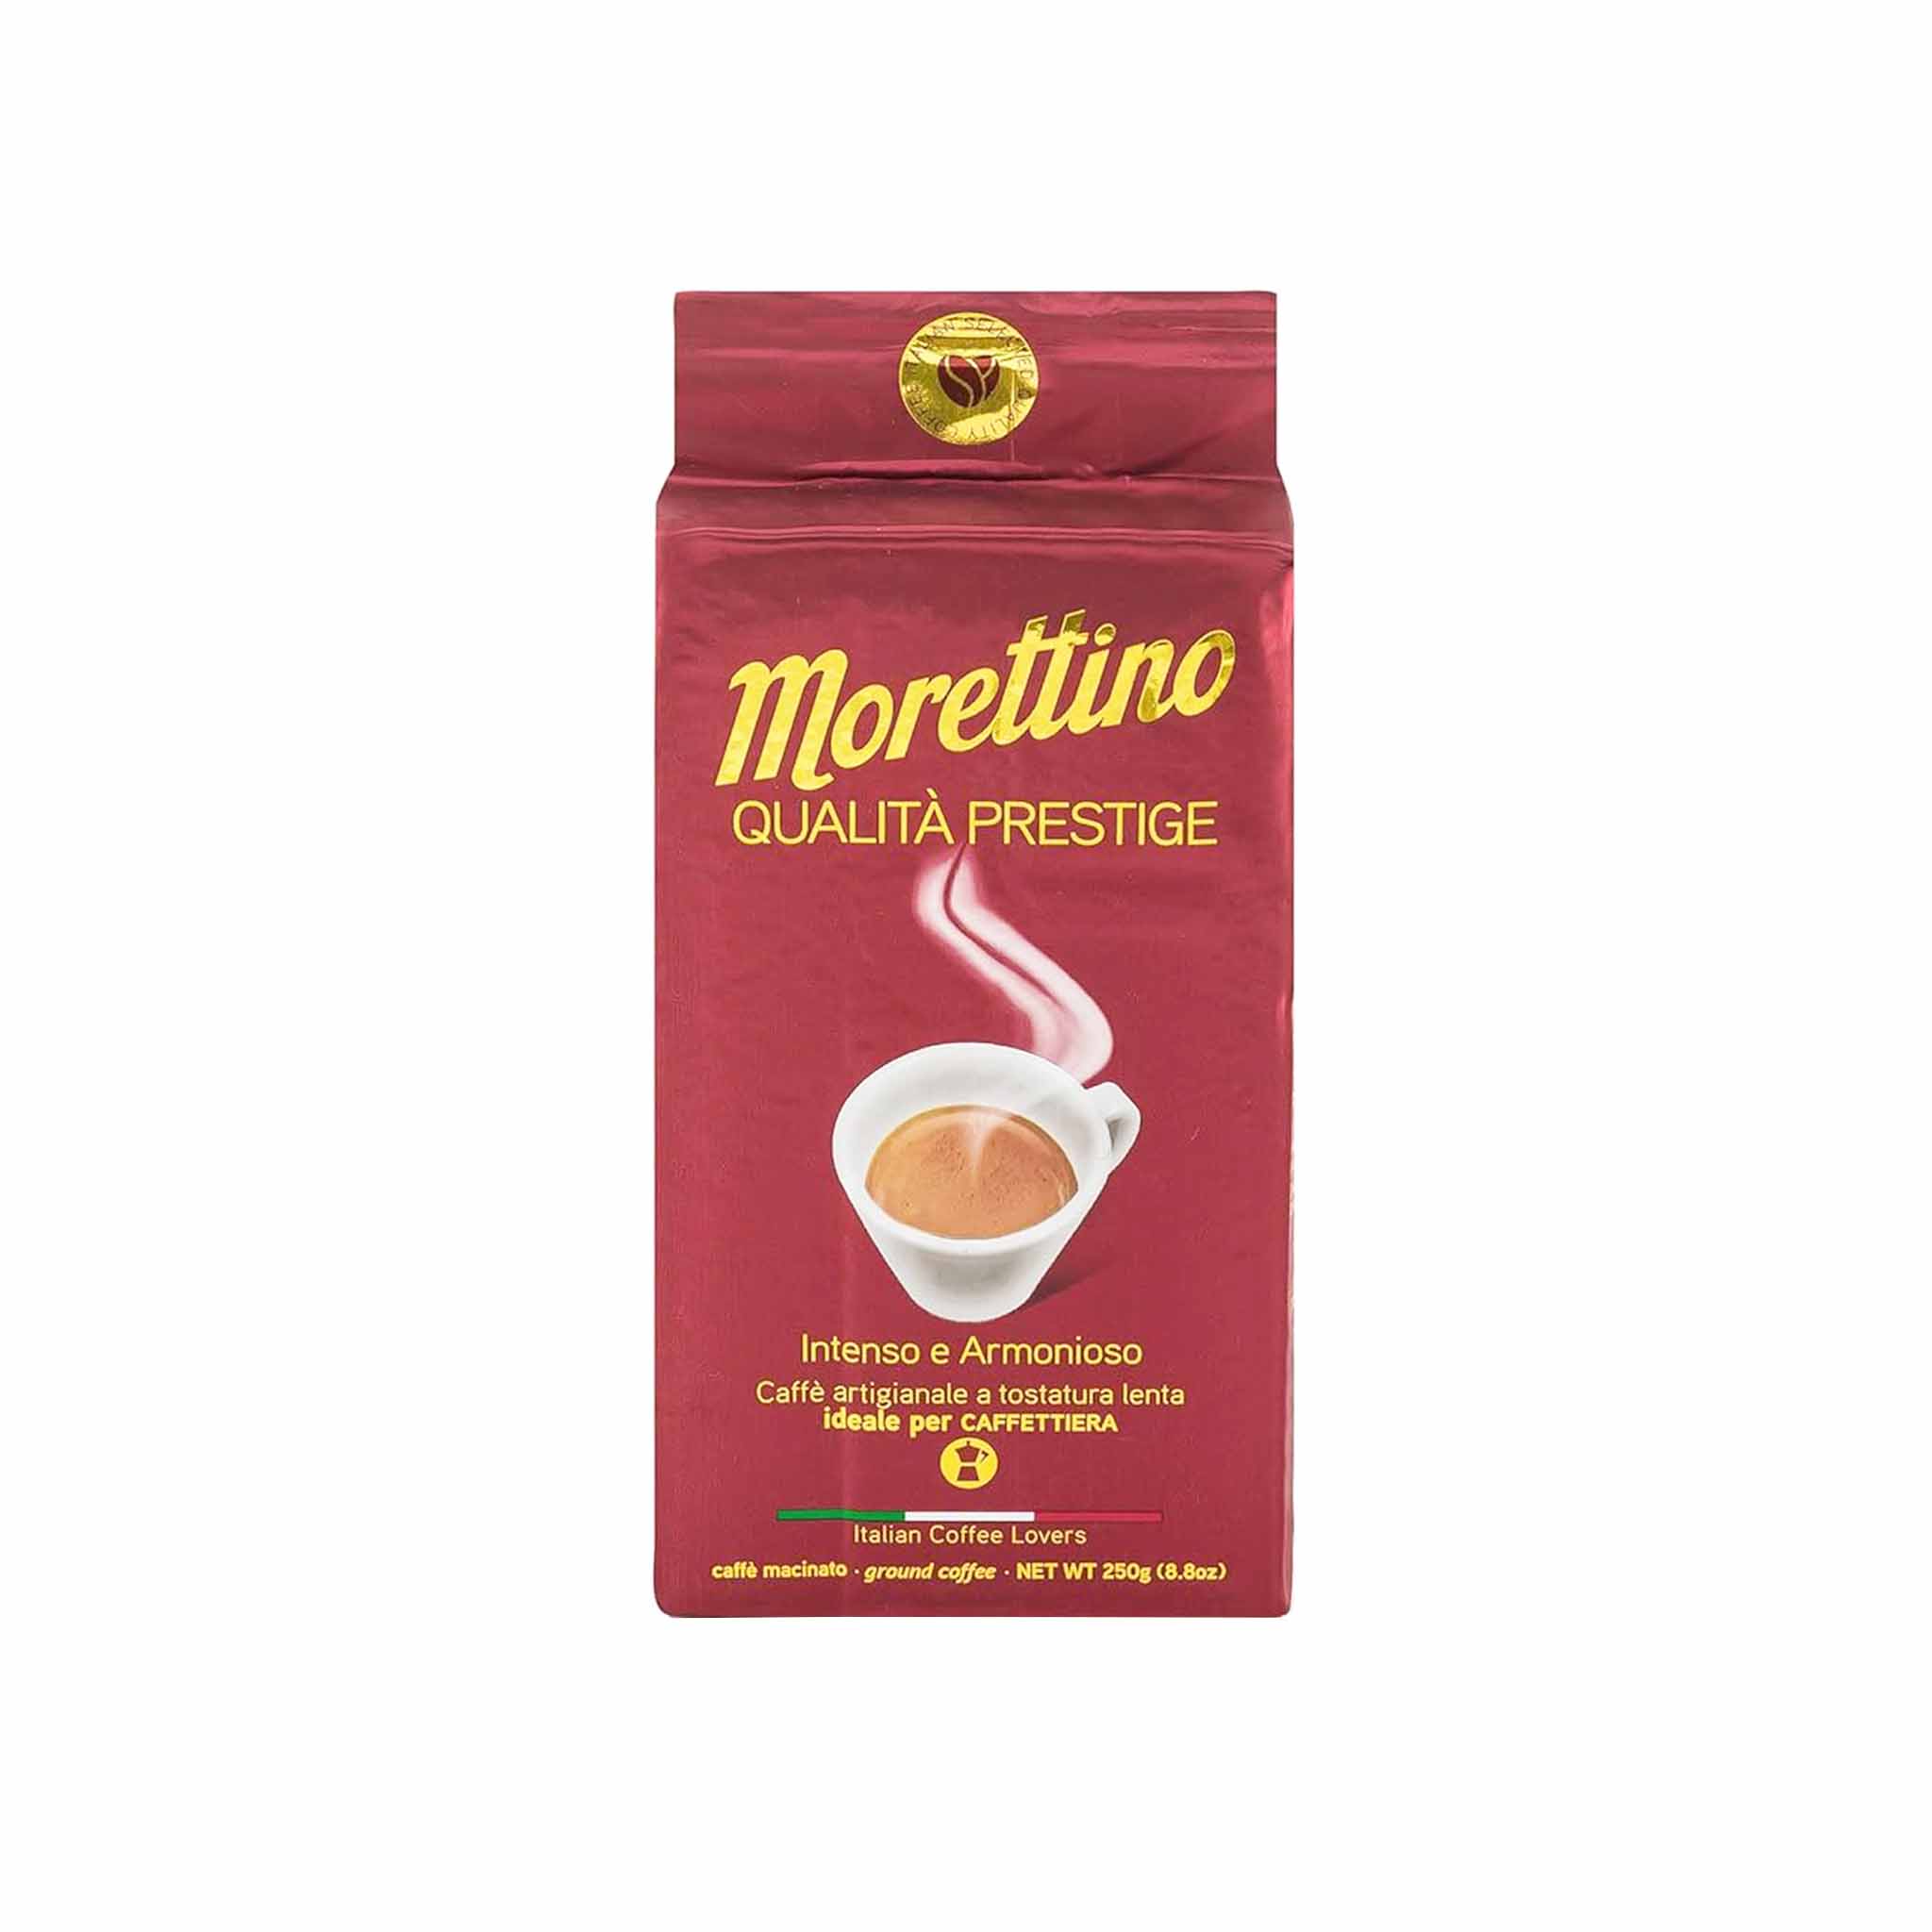 MORETTINO QUALITA PRESTIGE COFFEE 250g